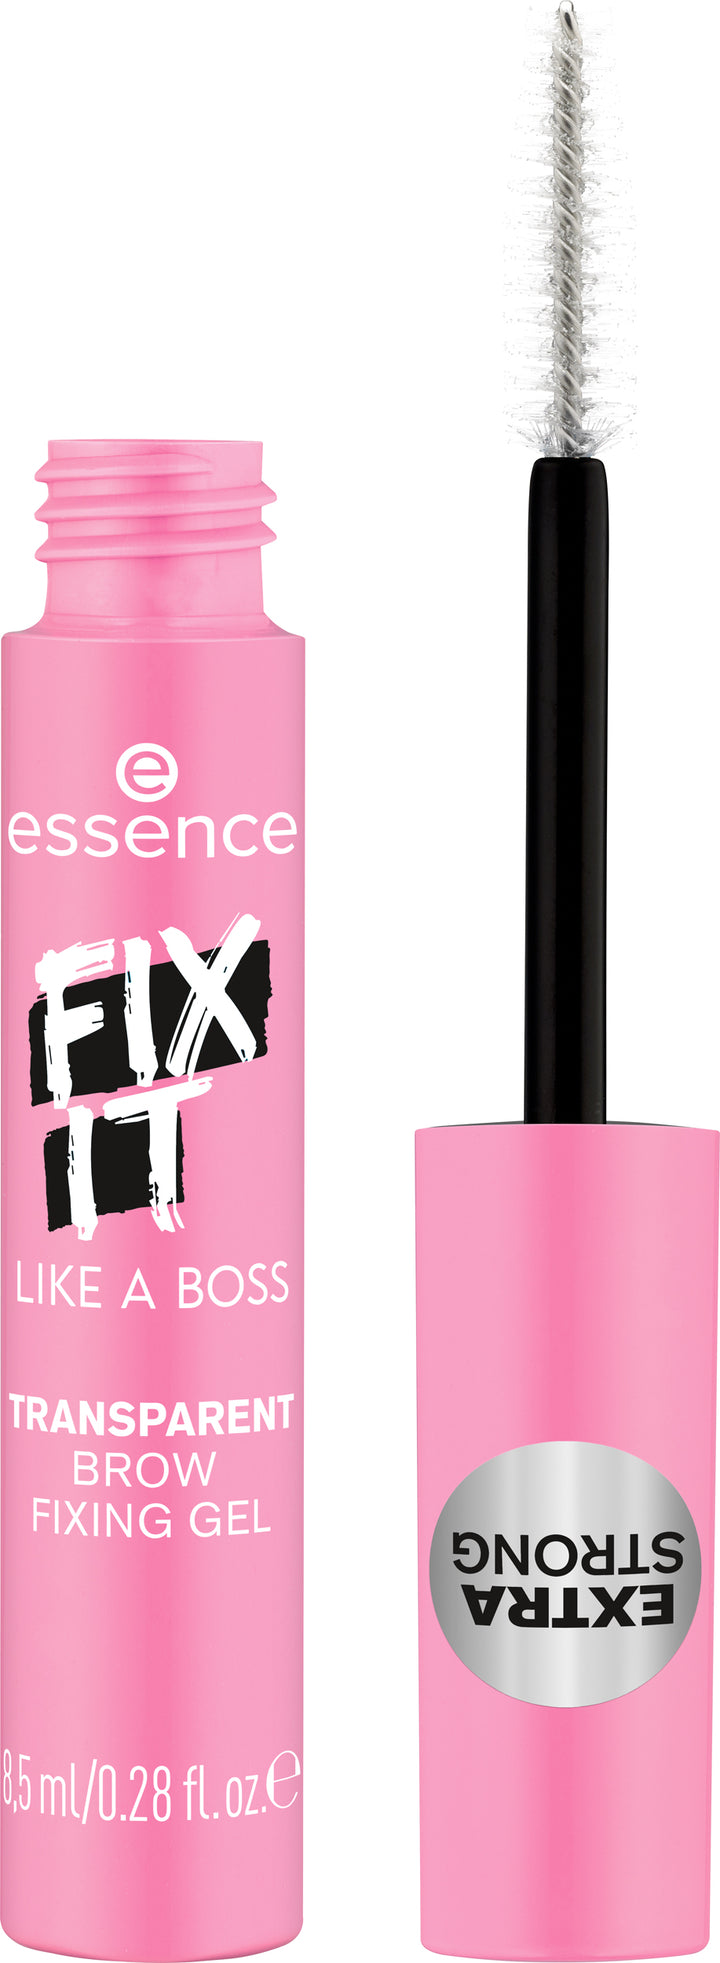 Essence Fix It Like A Boss Transparent Brow Fixing Gel